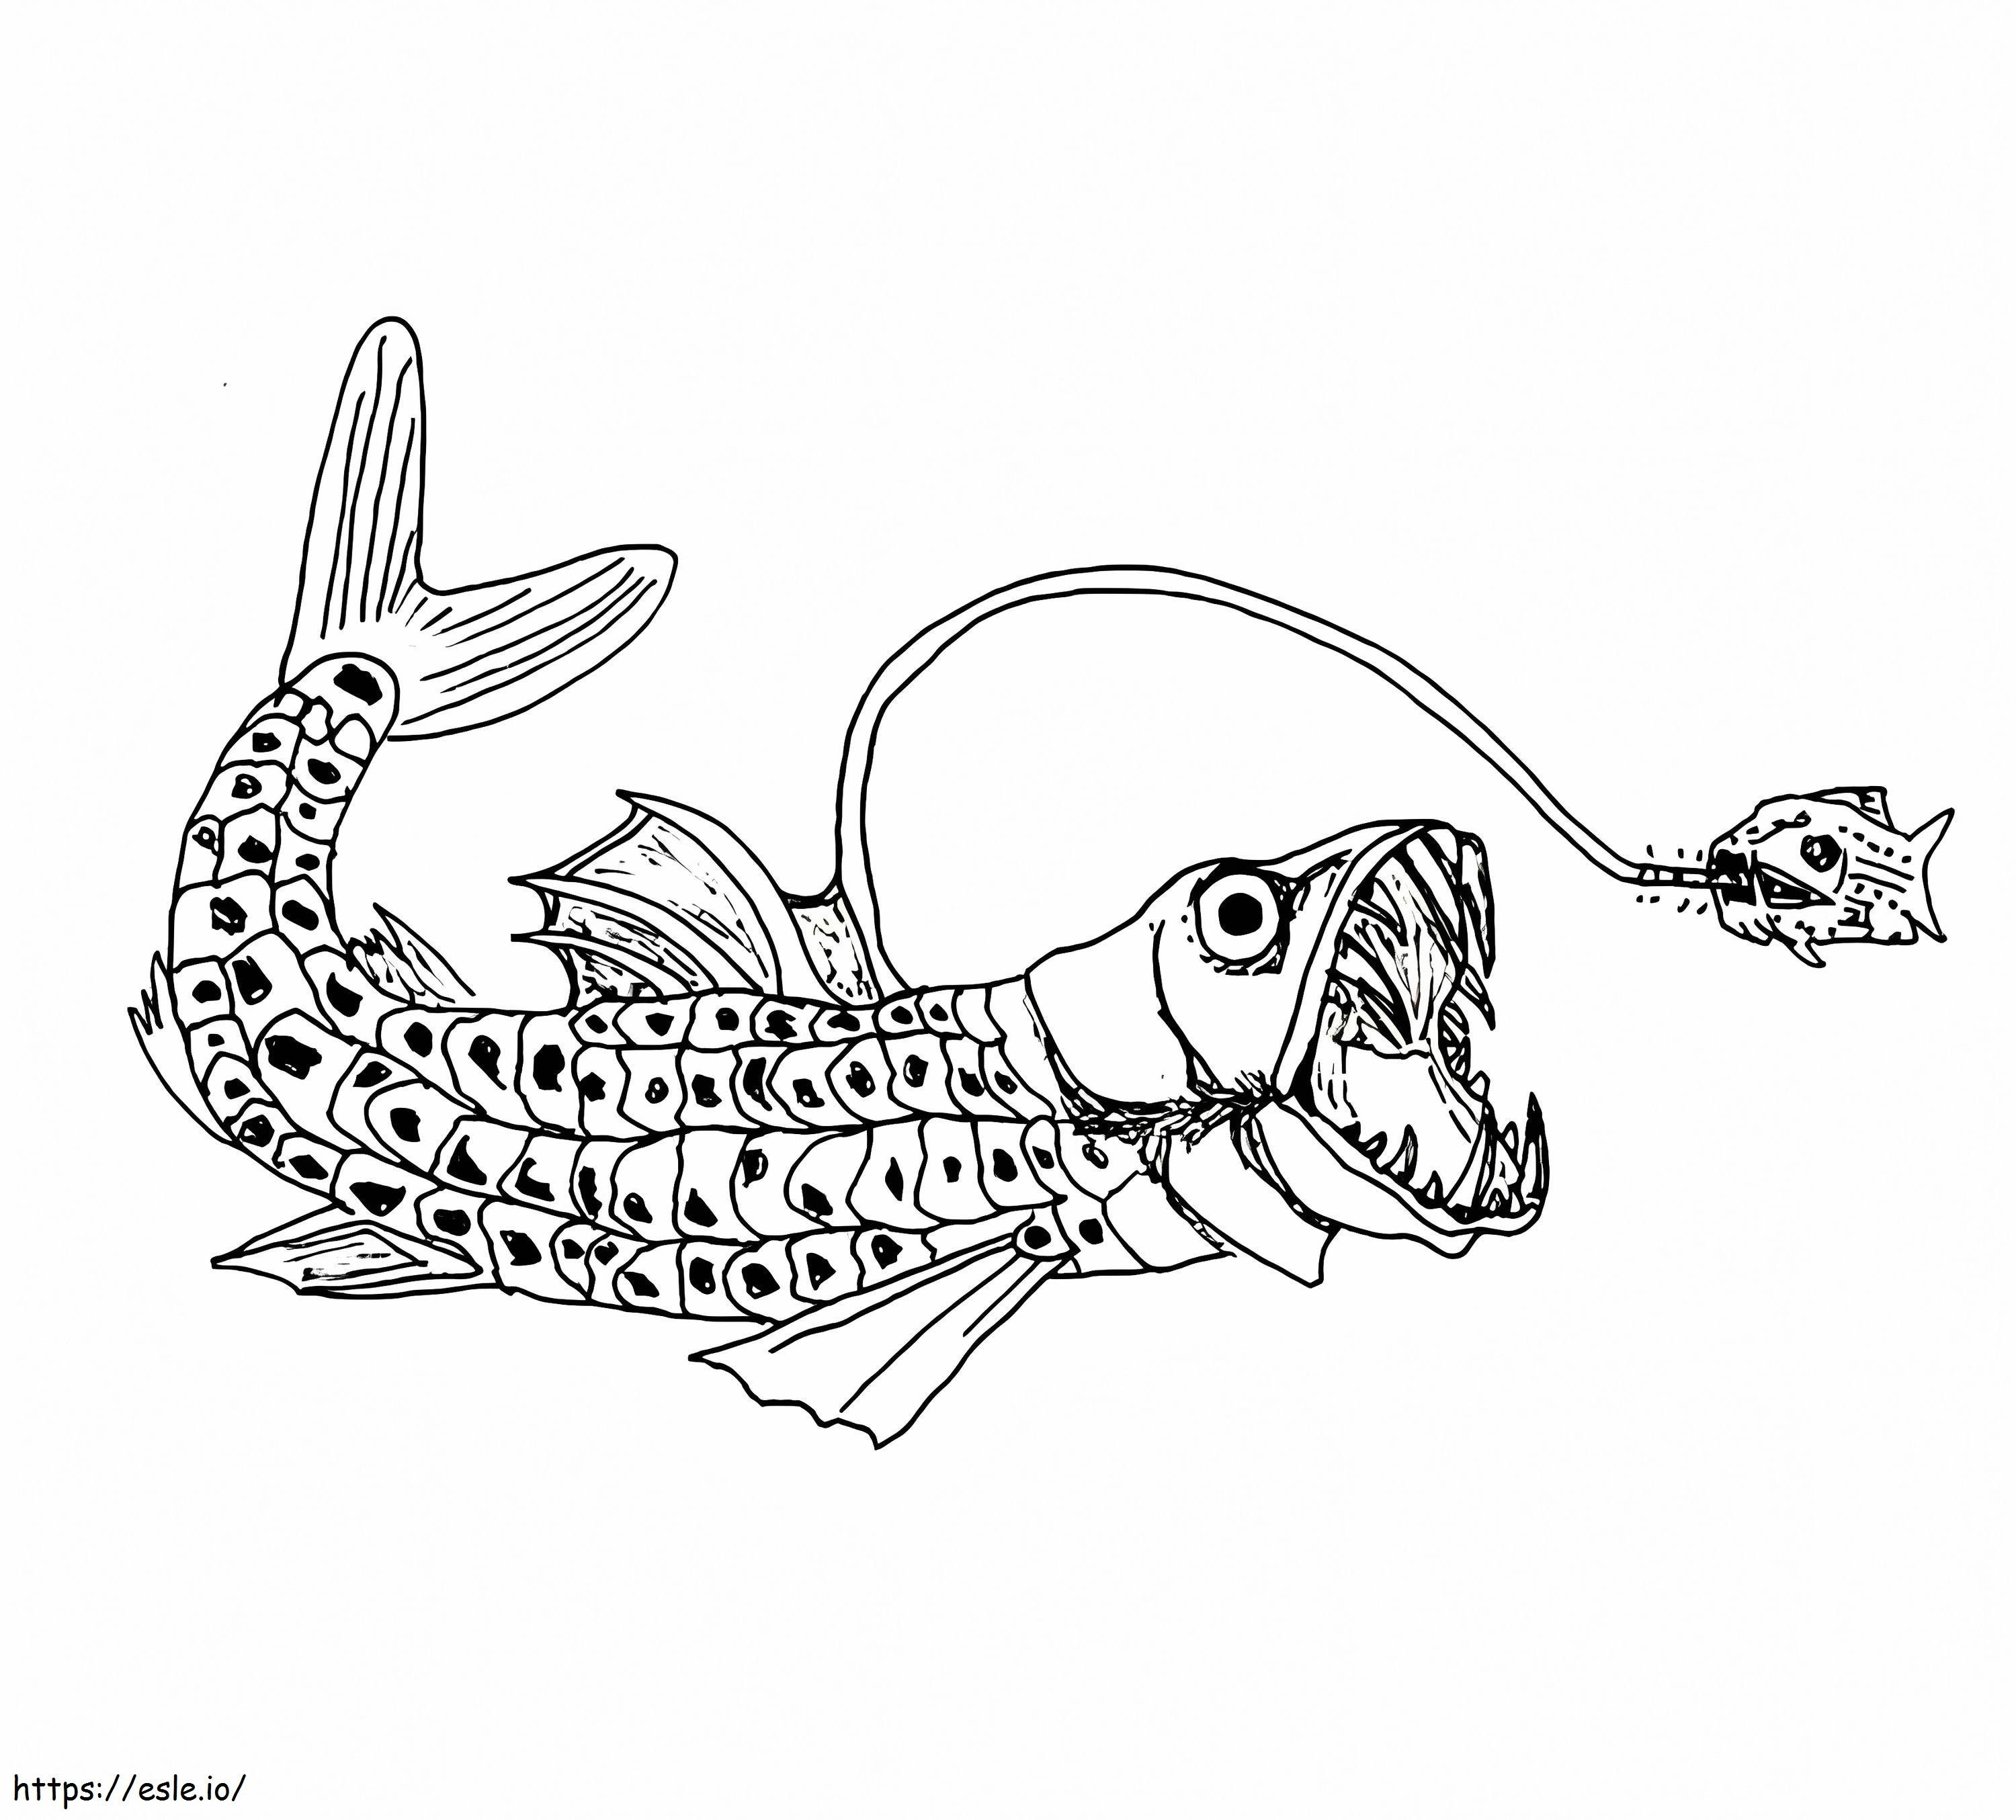 Viperfischjagd ausmalbilder